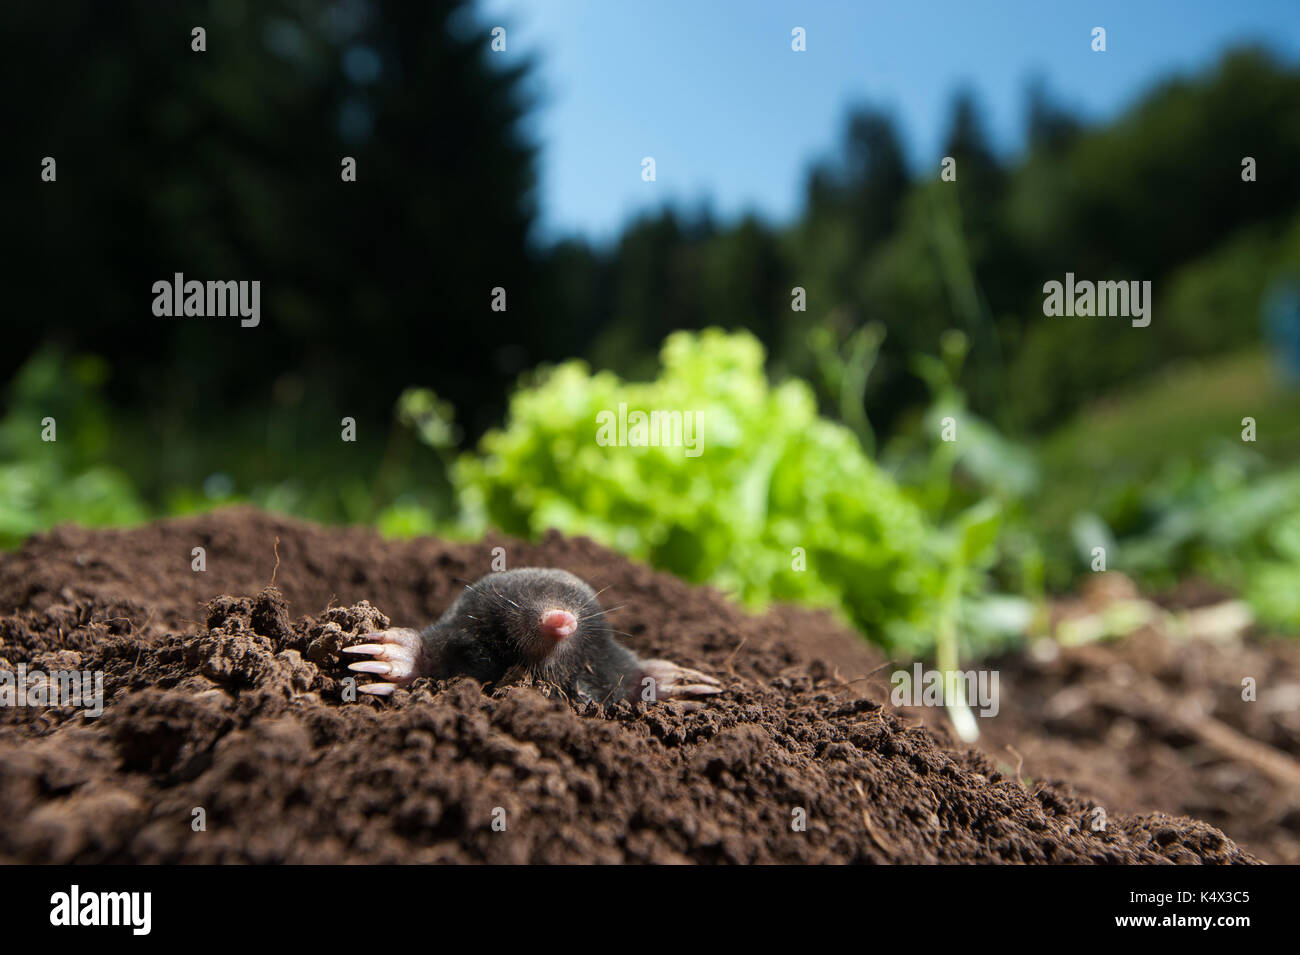 Mole peeking out of it's hole in the garden Stock Photo